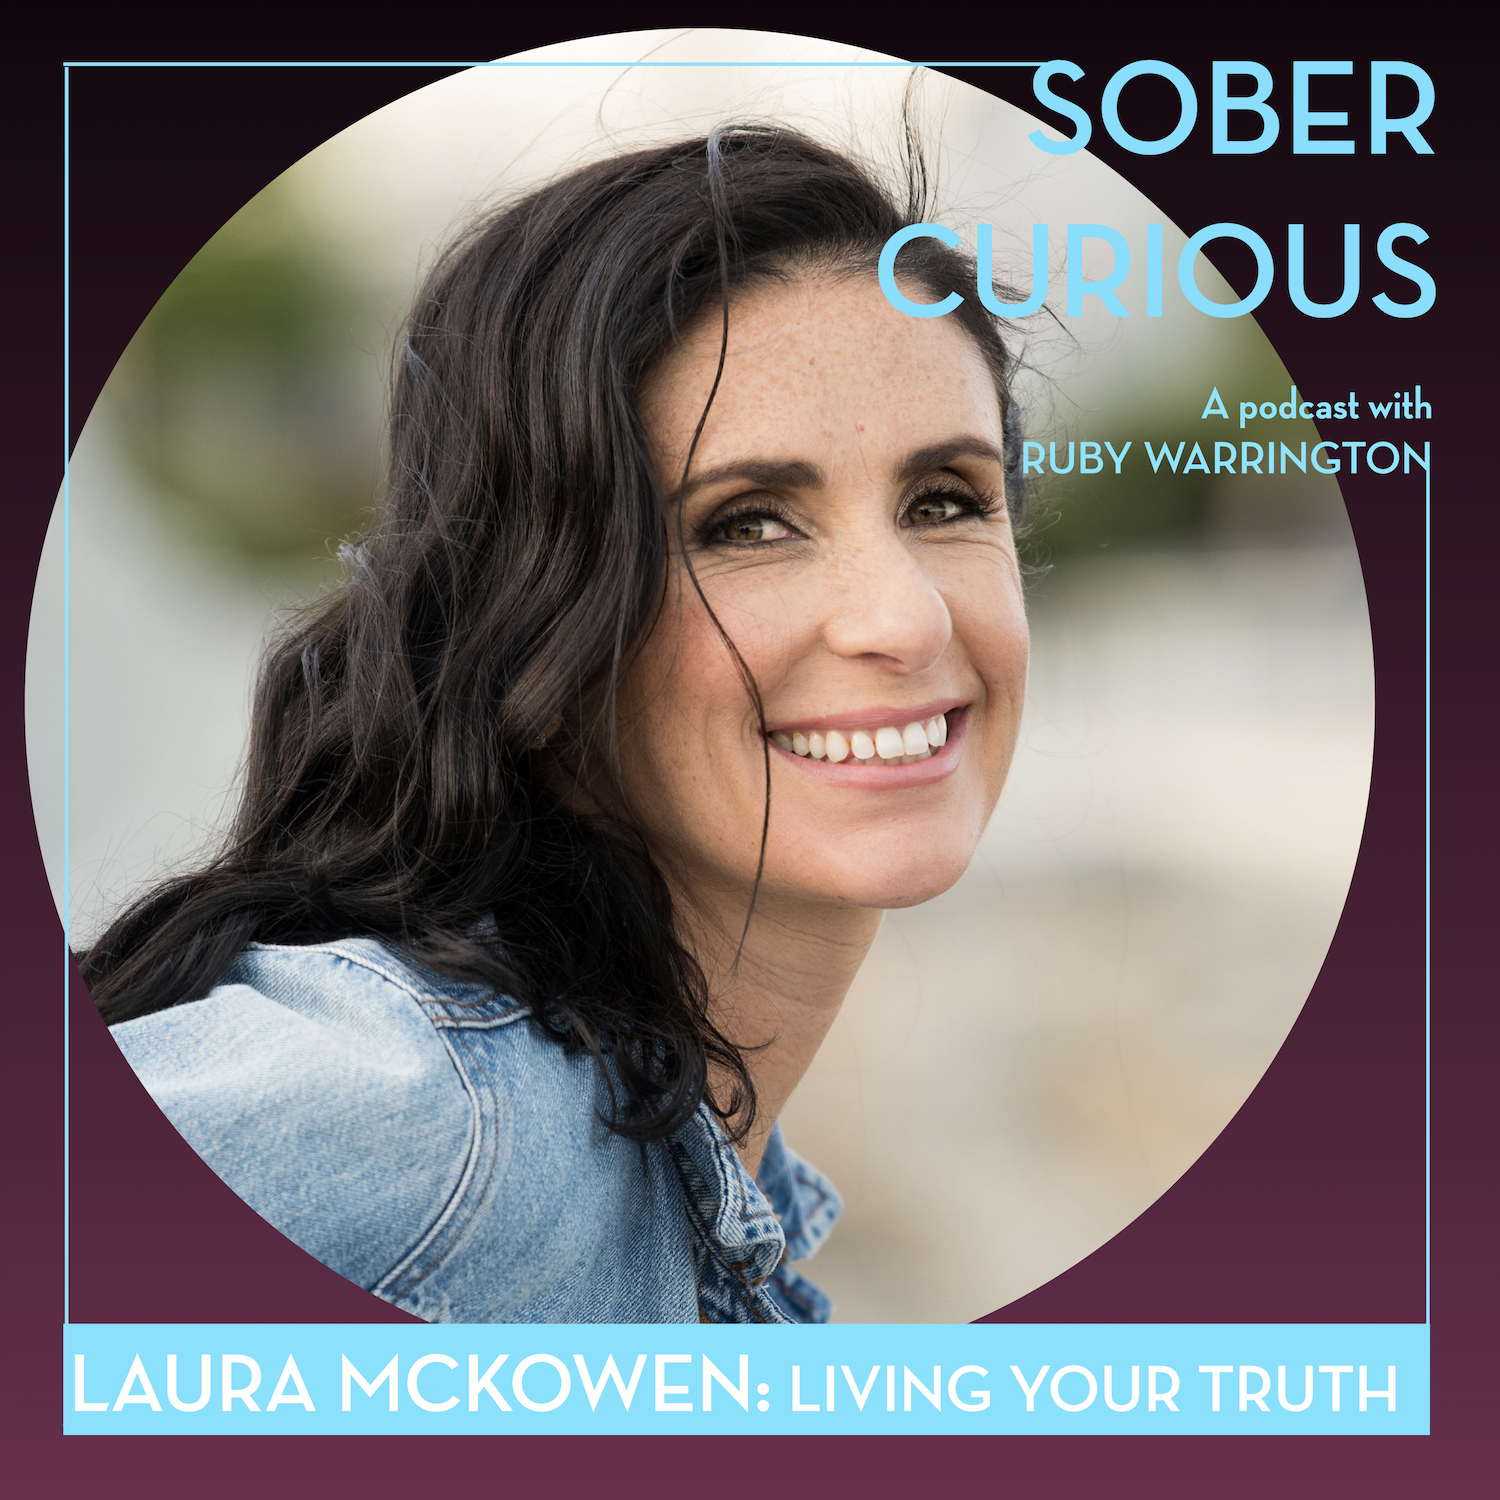 Laura McKowen sober curious podcast Ruby Warrington